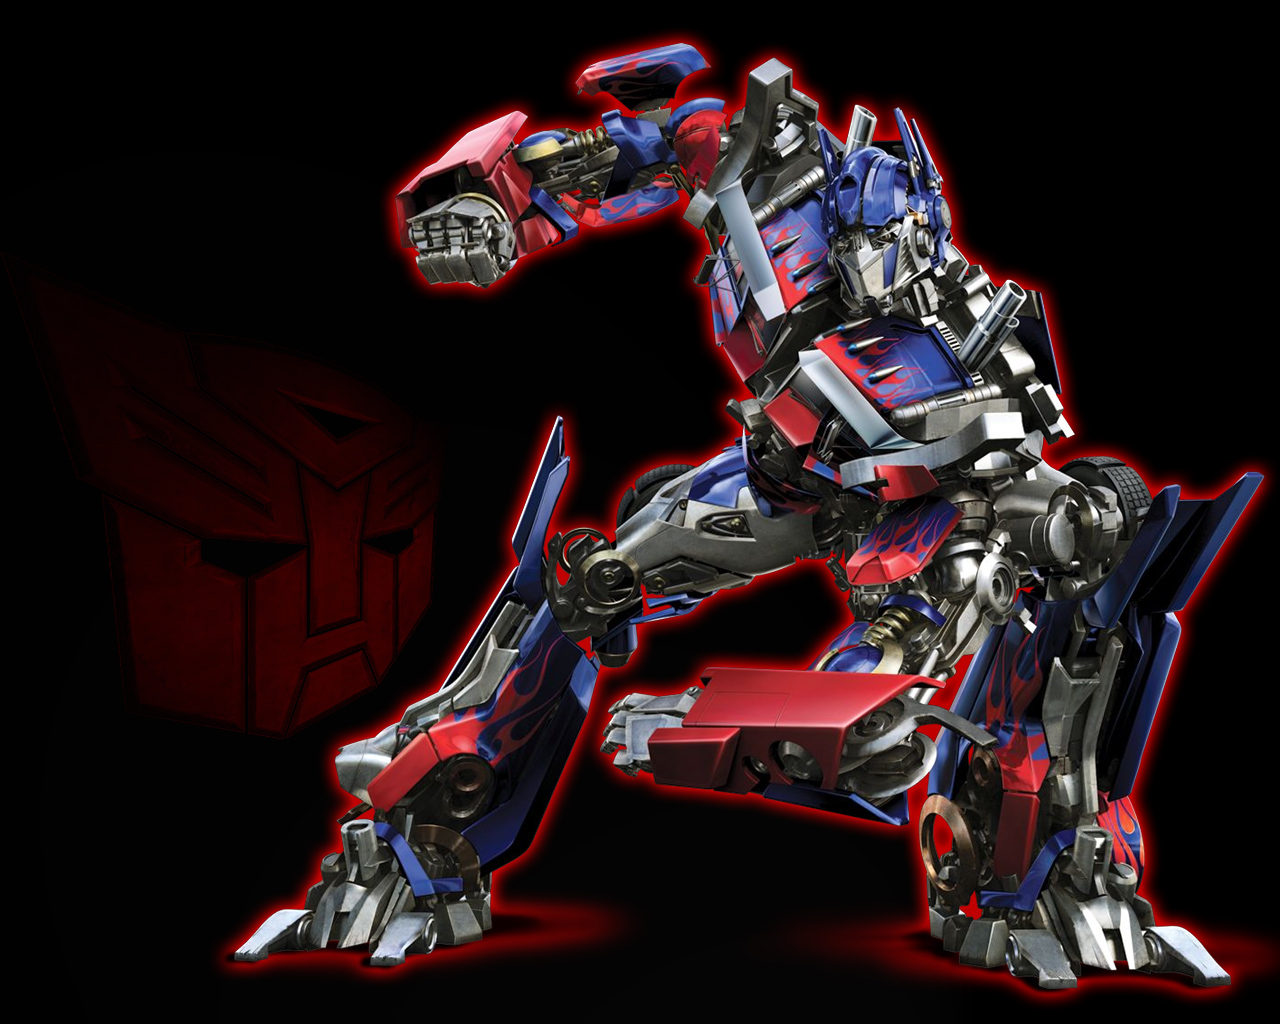 Transformers-transformers-627086_1280_1024.jpg